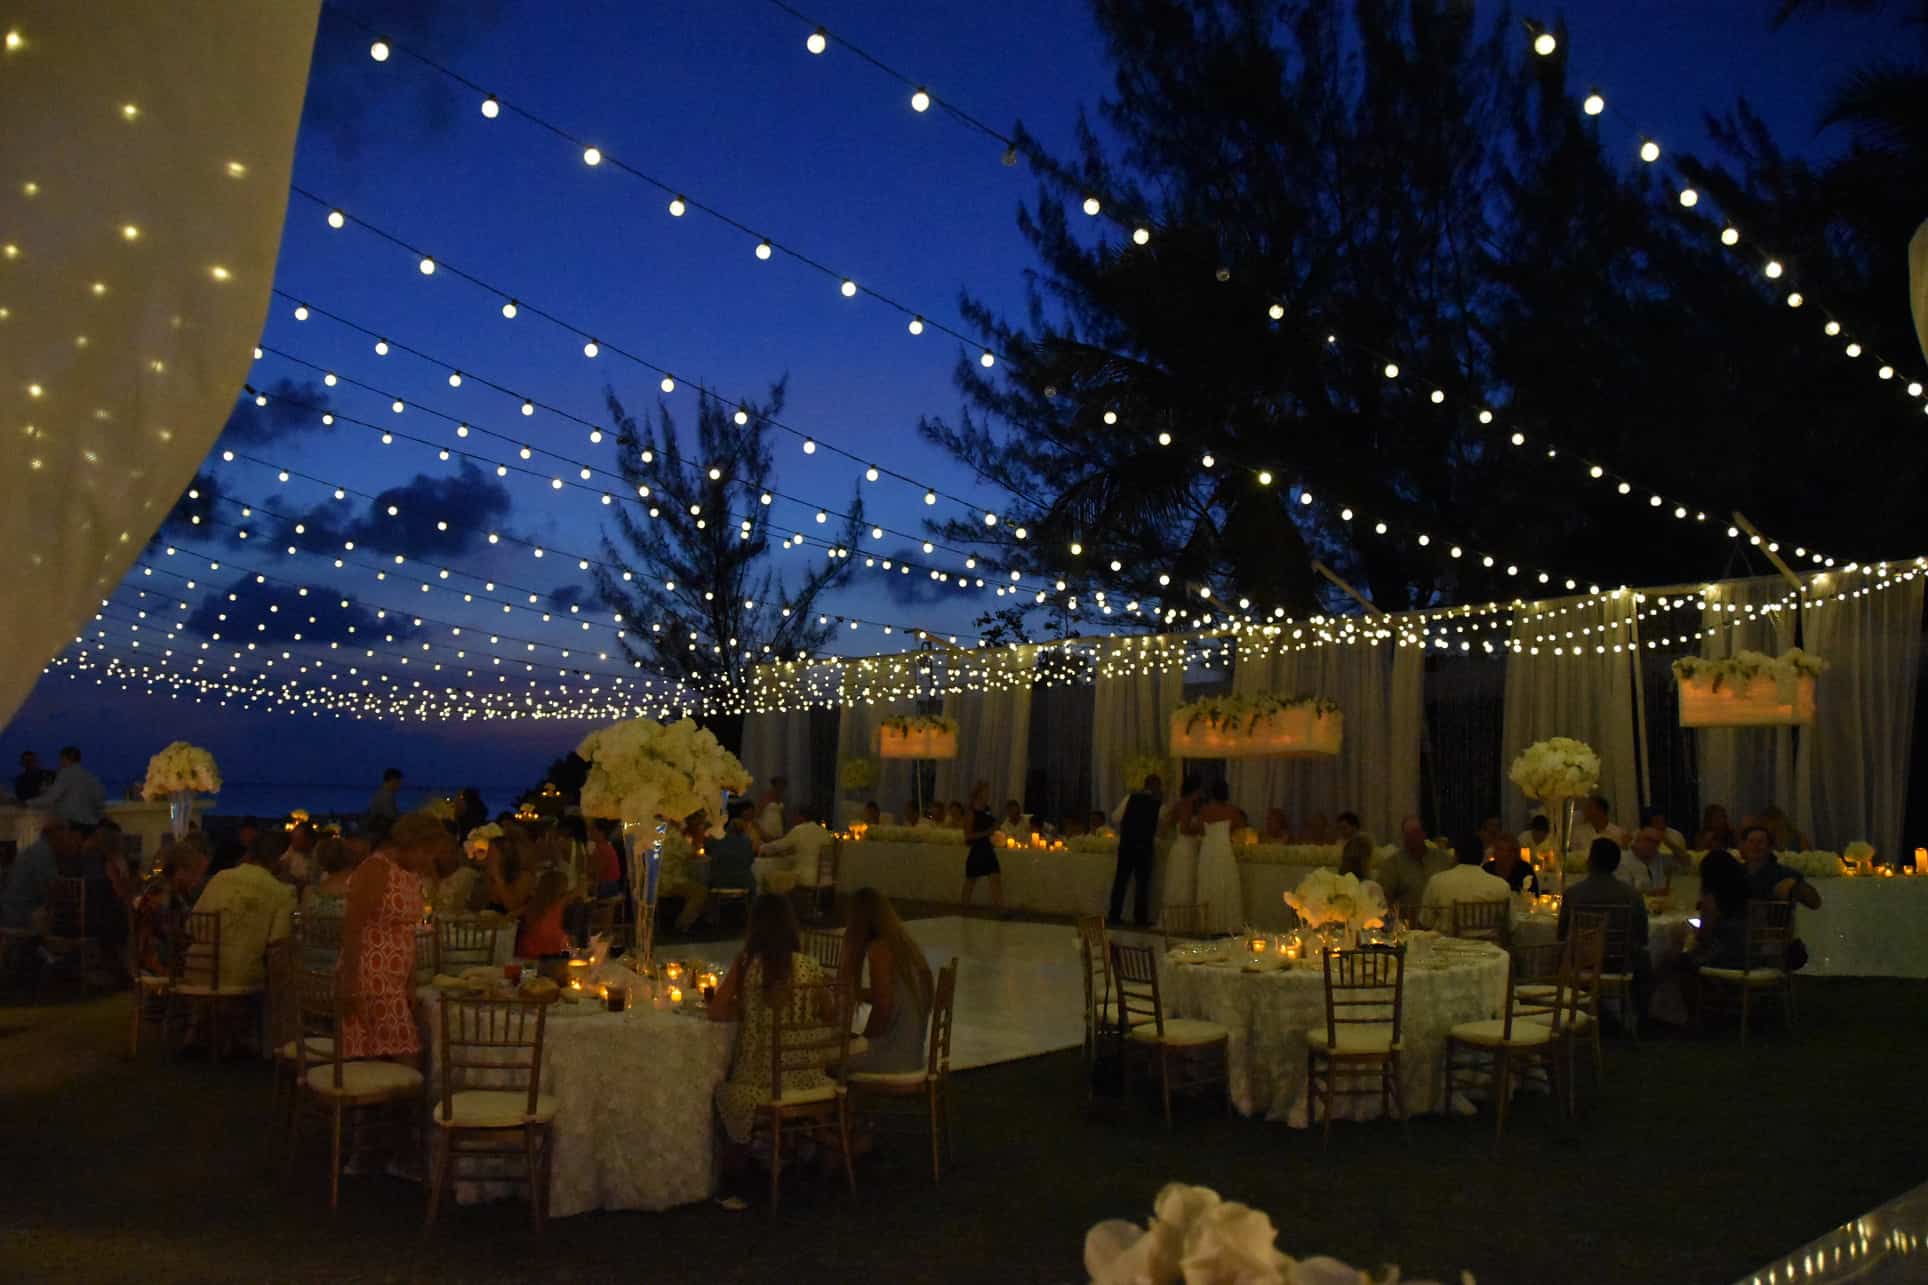 wedding under the moonlight reception beach, twinkle lights, fairy lights, party globe lights